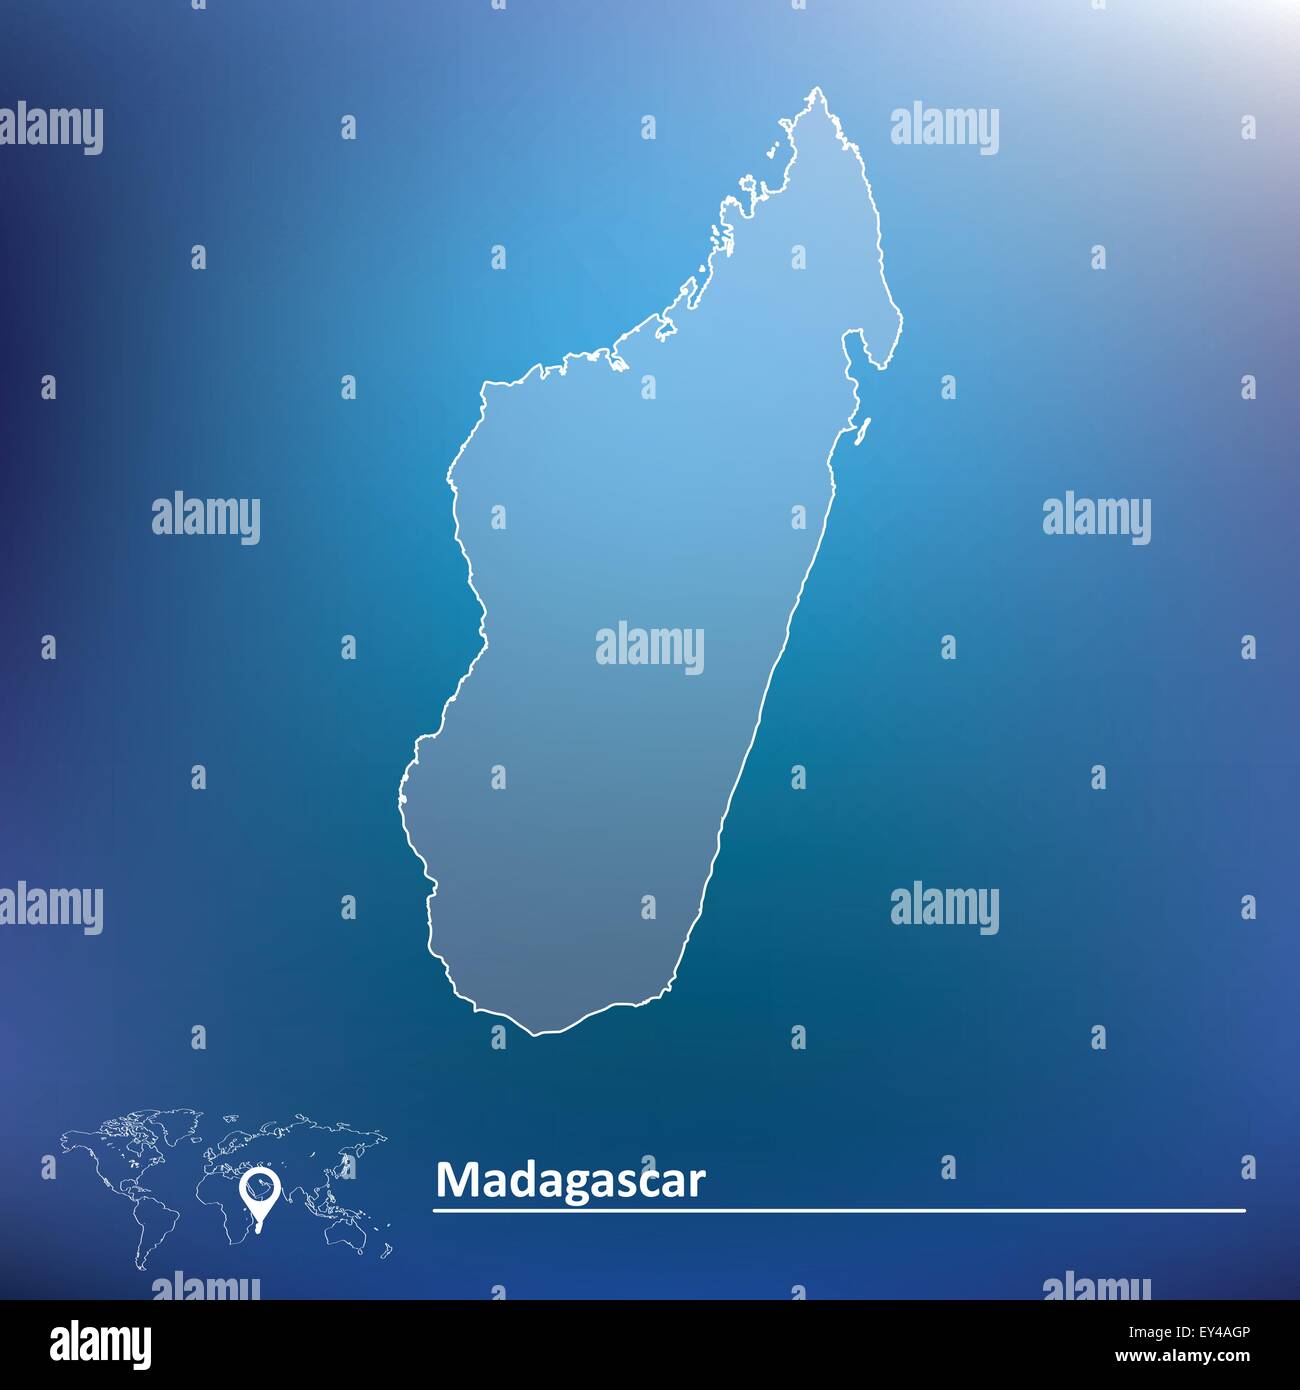 Vector De Mapa De Madagascar Fotograf As E Im Genes De Alta Resoluci N